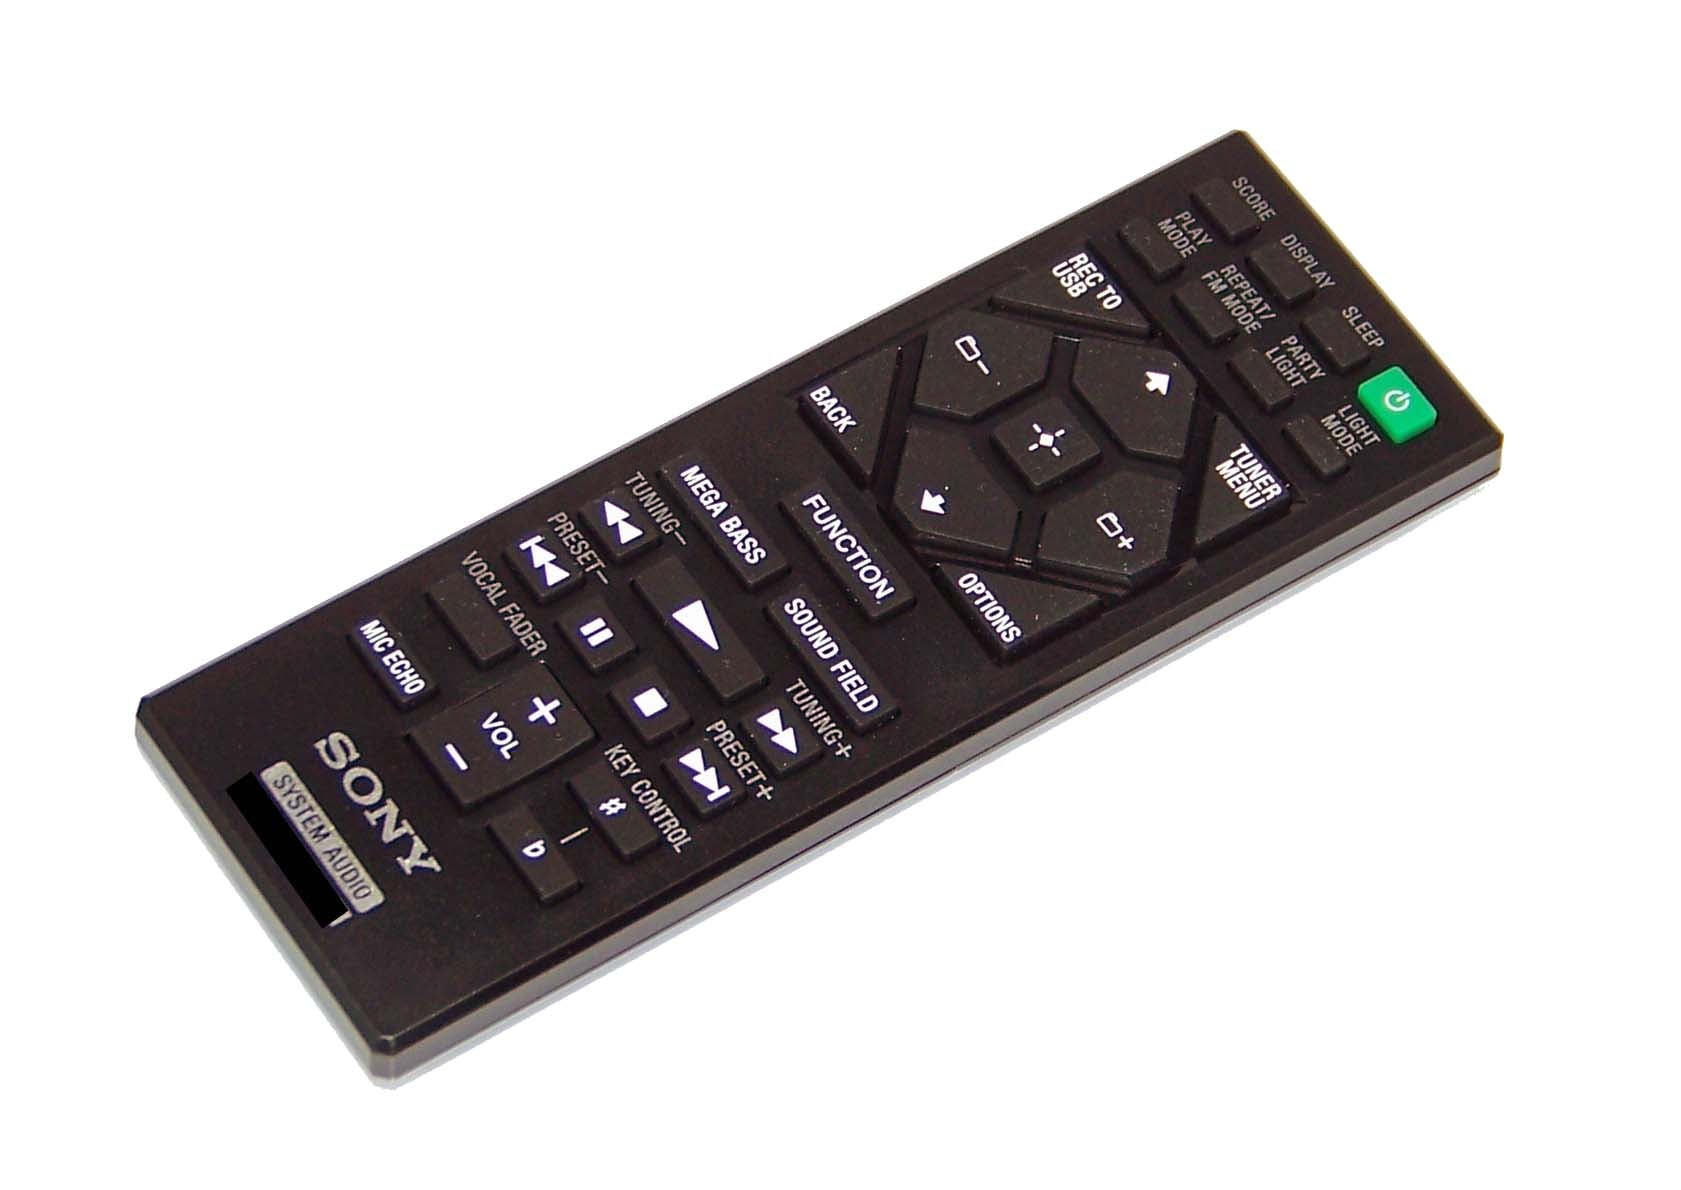 NEW OEM Sony Remote Control Originally Shipped With MHCV50, MHC-V50